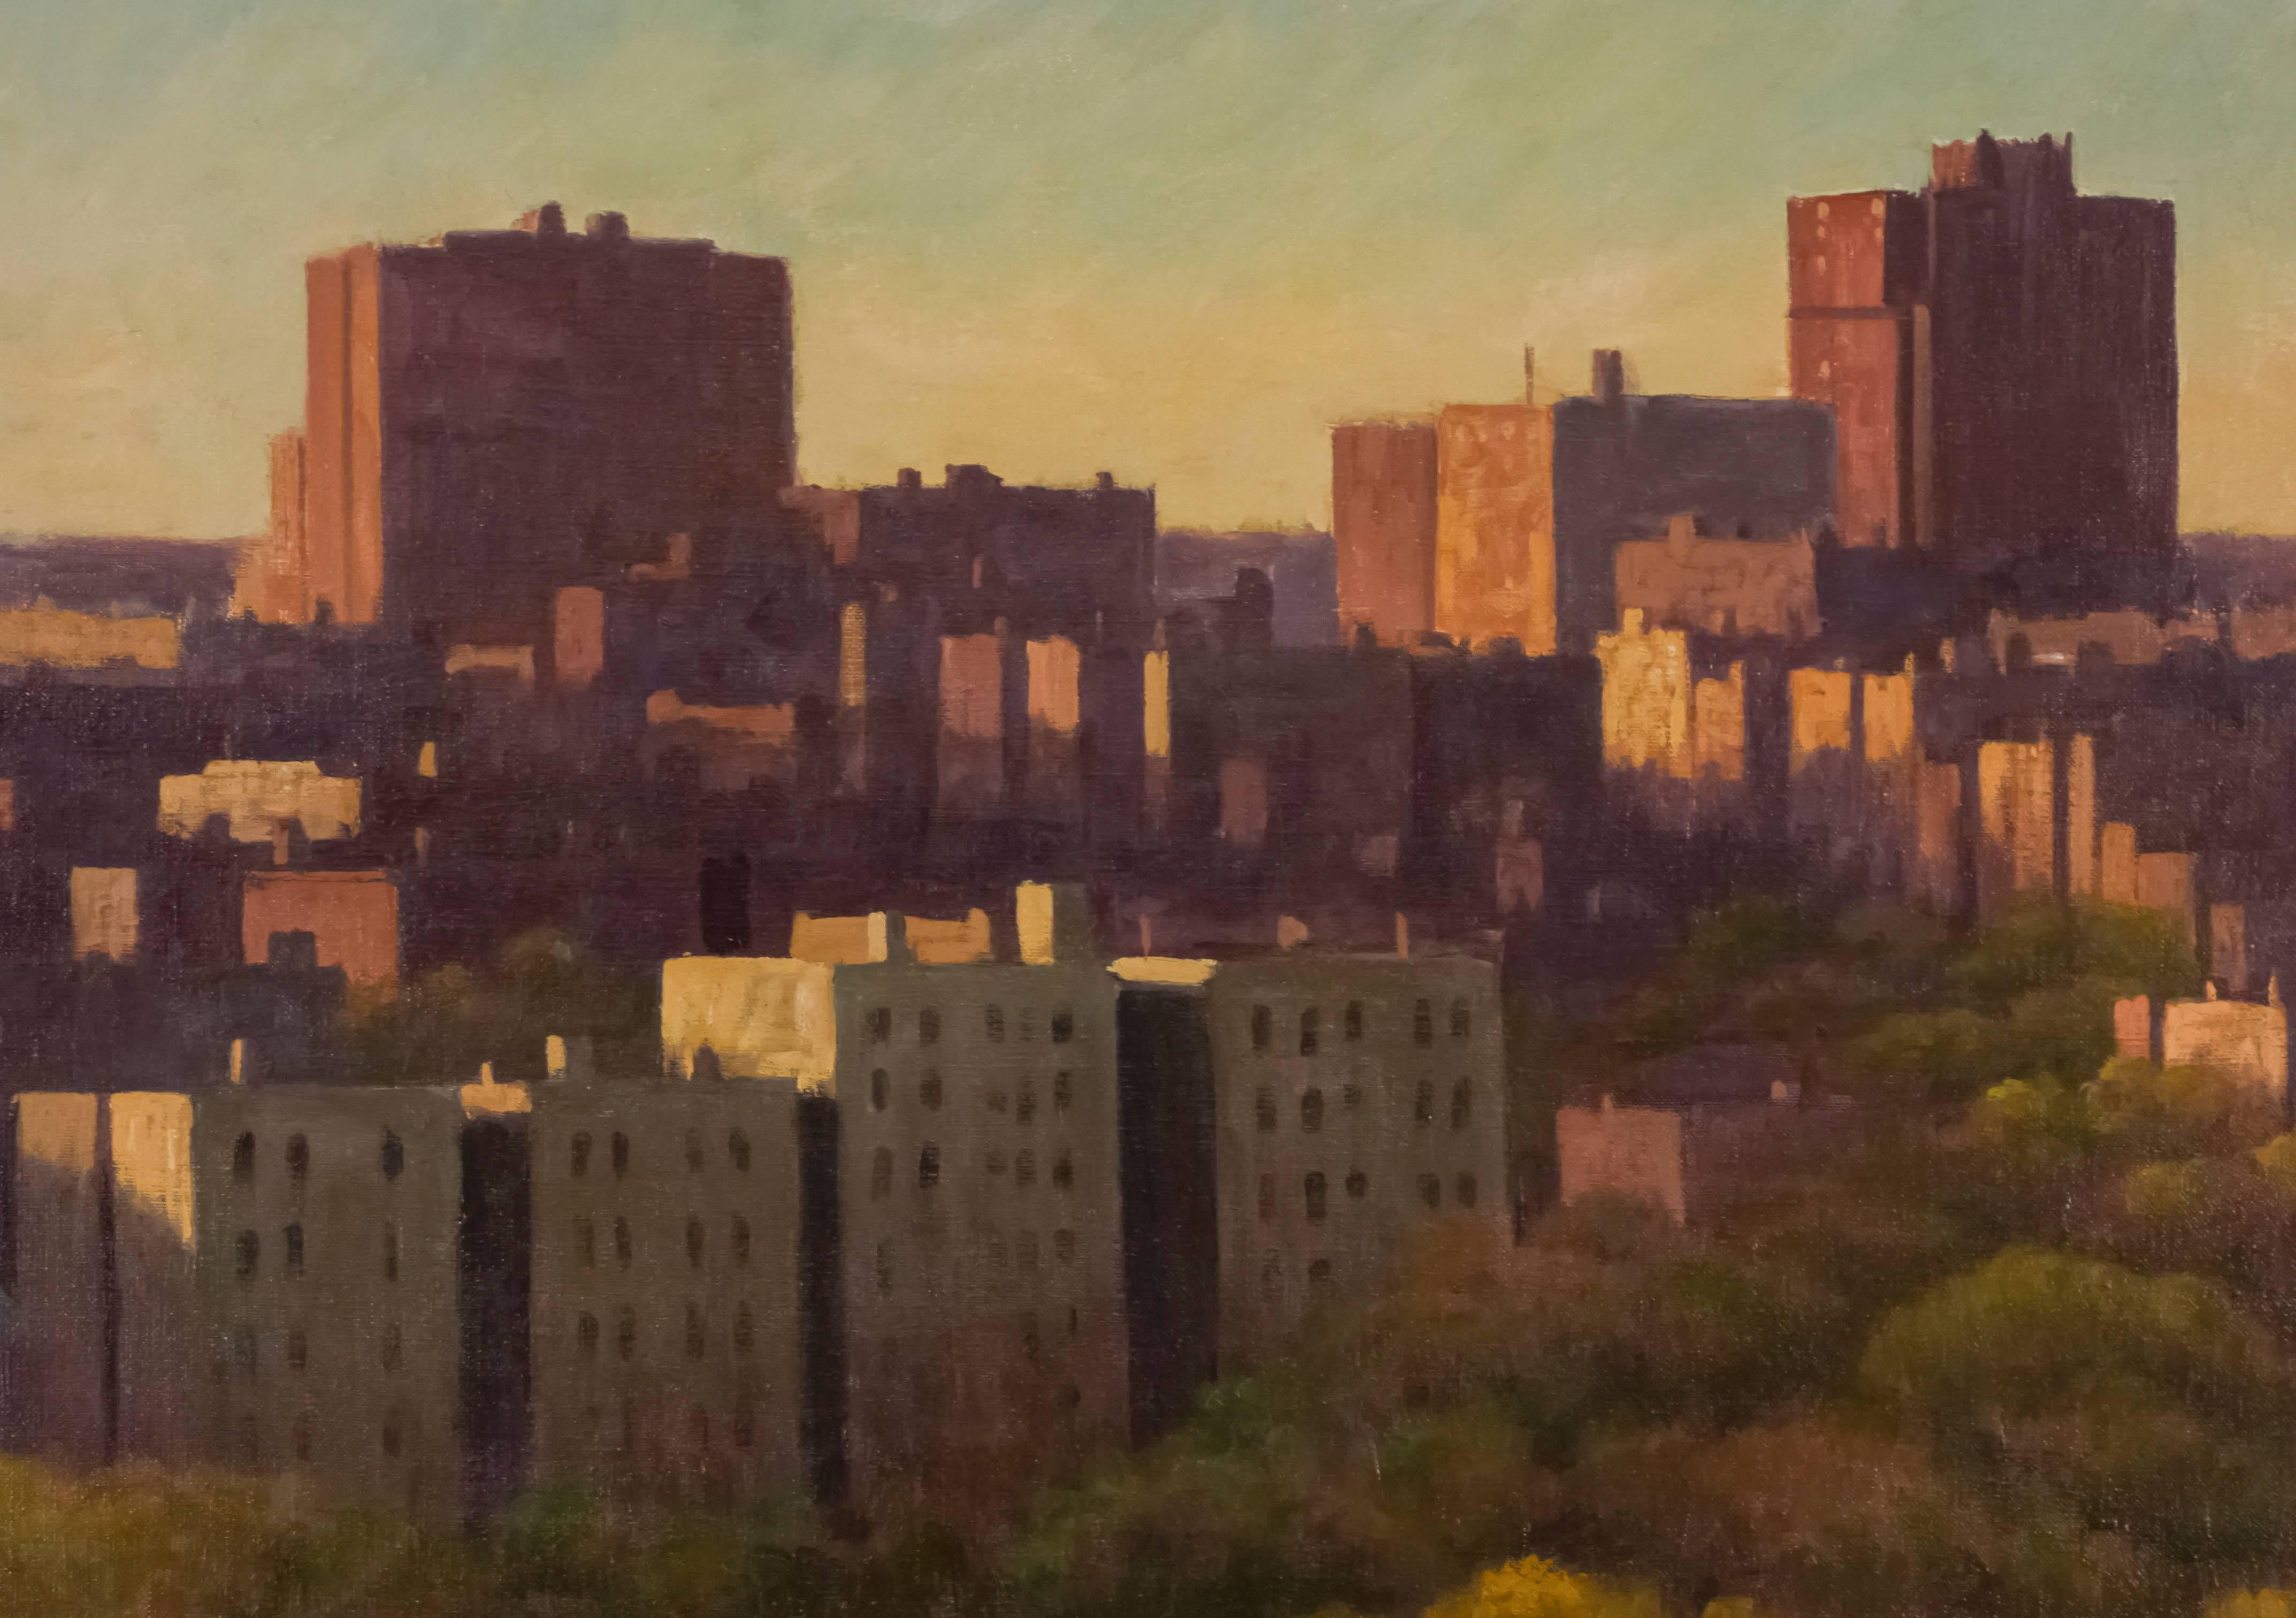 The Bronx - Painting by Max Brickman